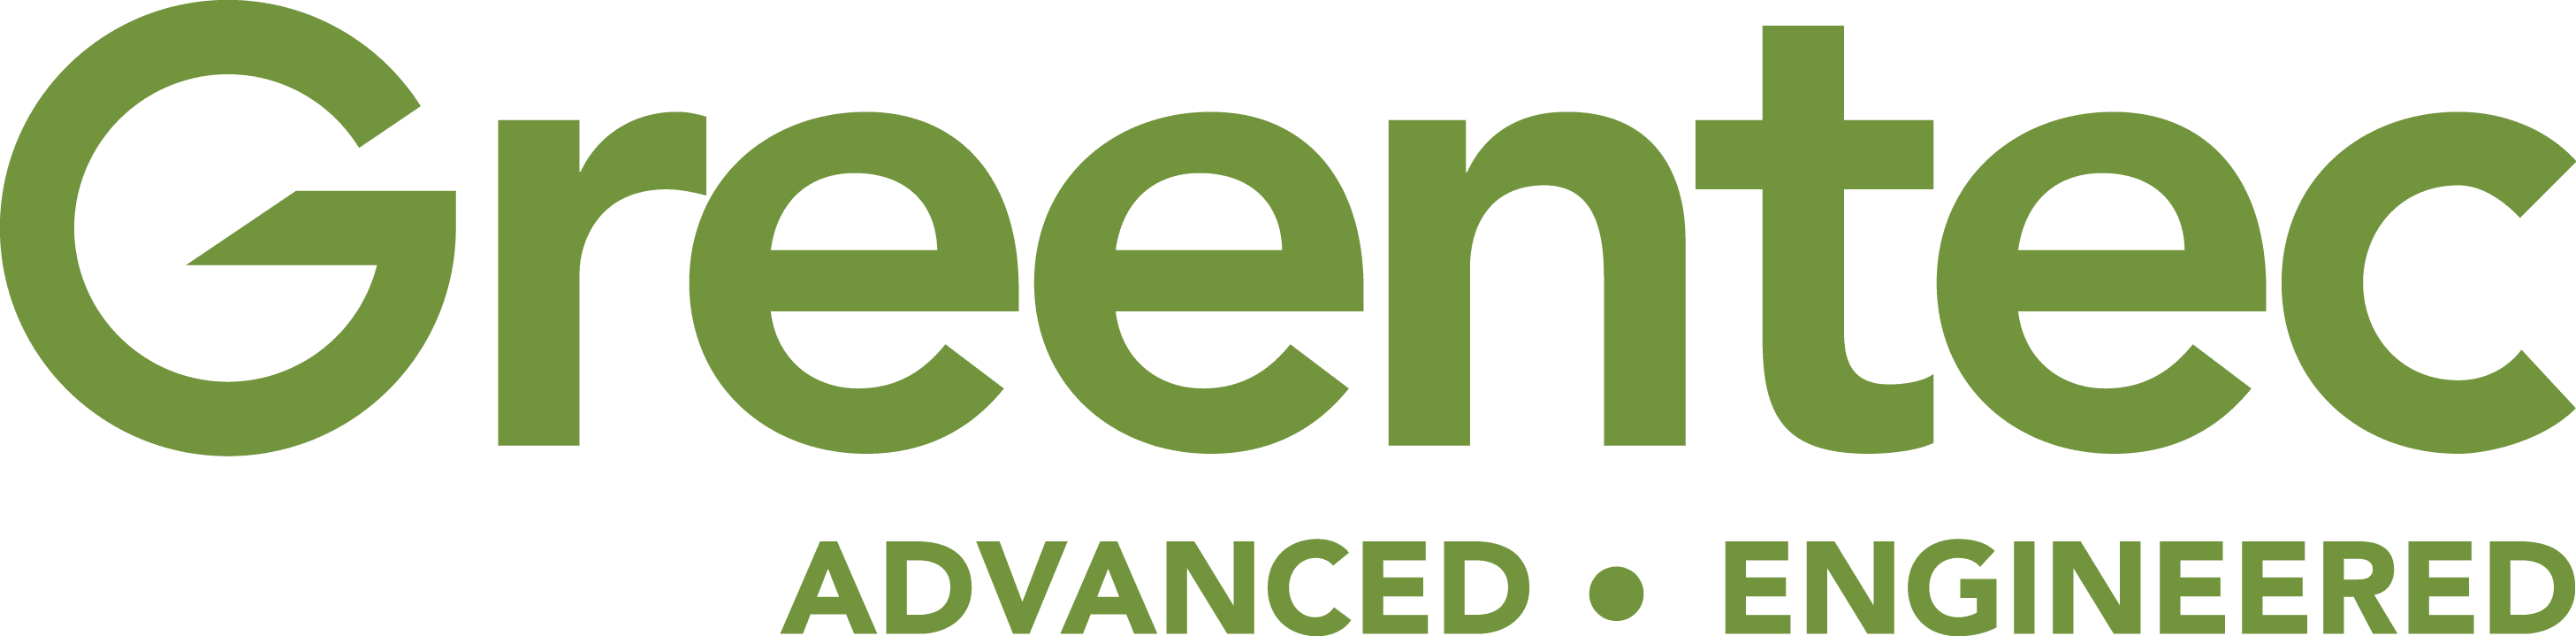 Greentec logo